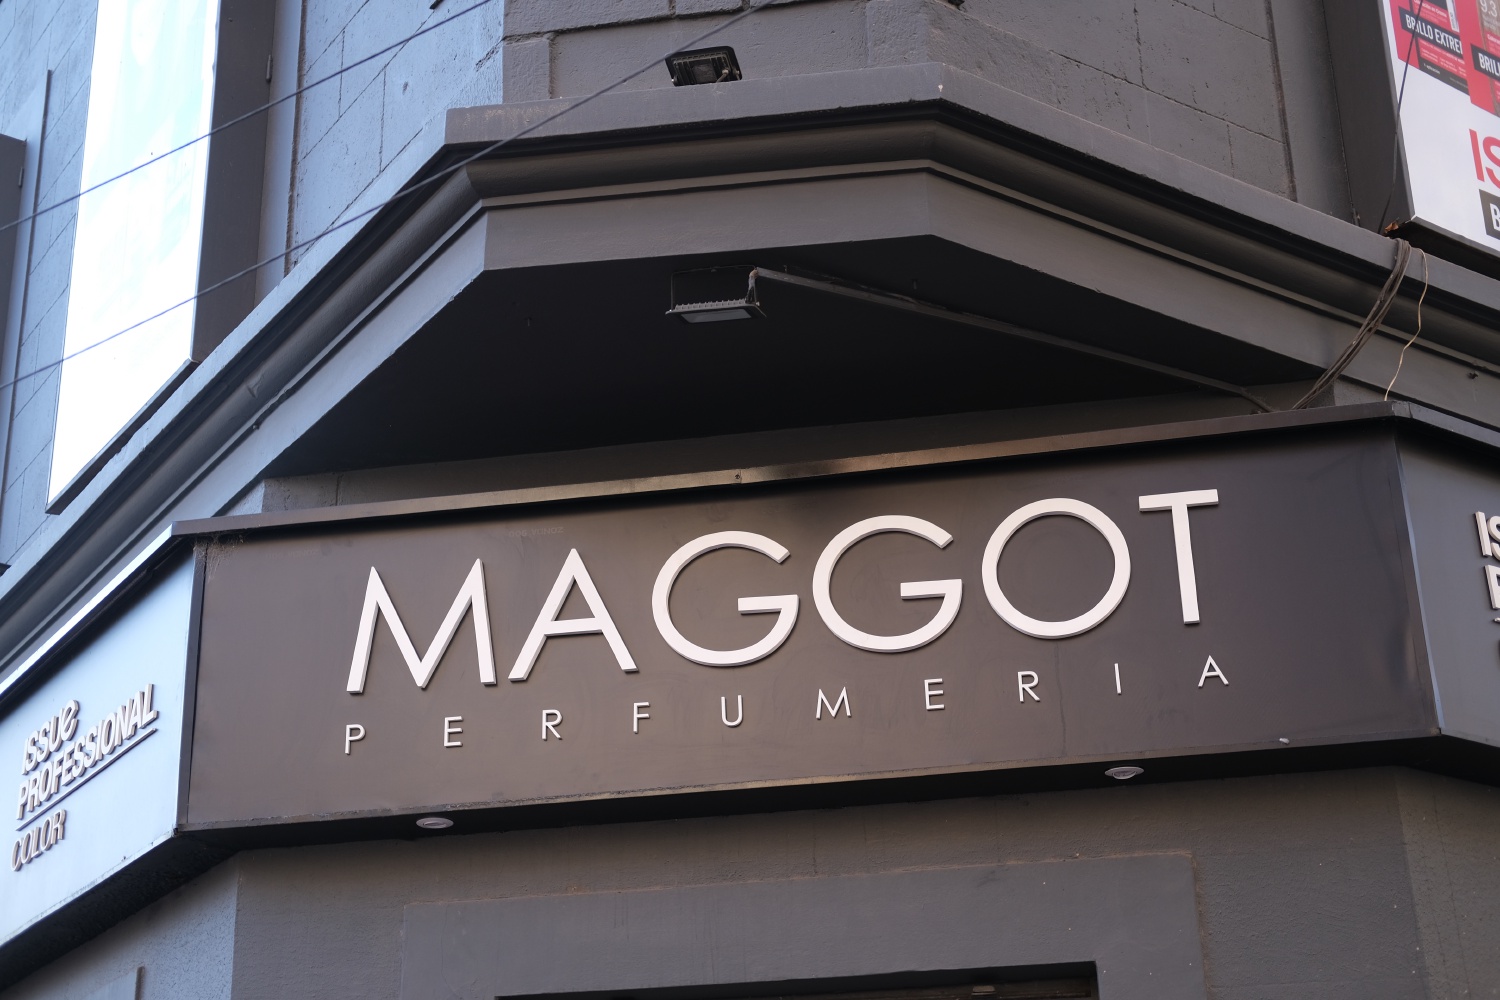 Maggot... Perfumeria.... Cool.